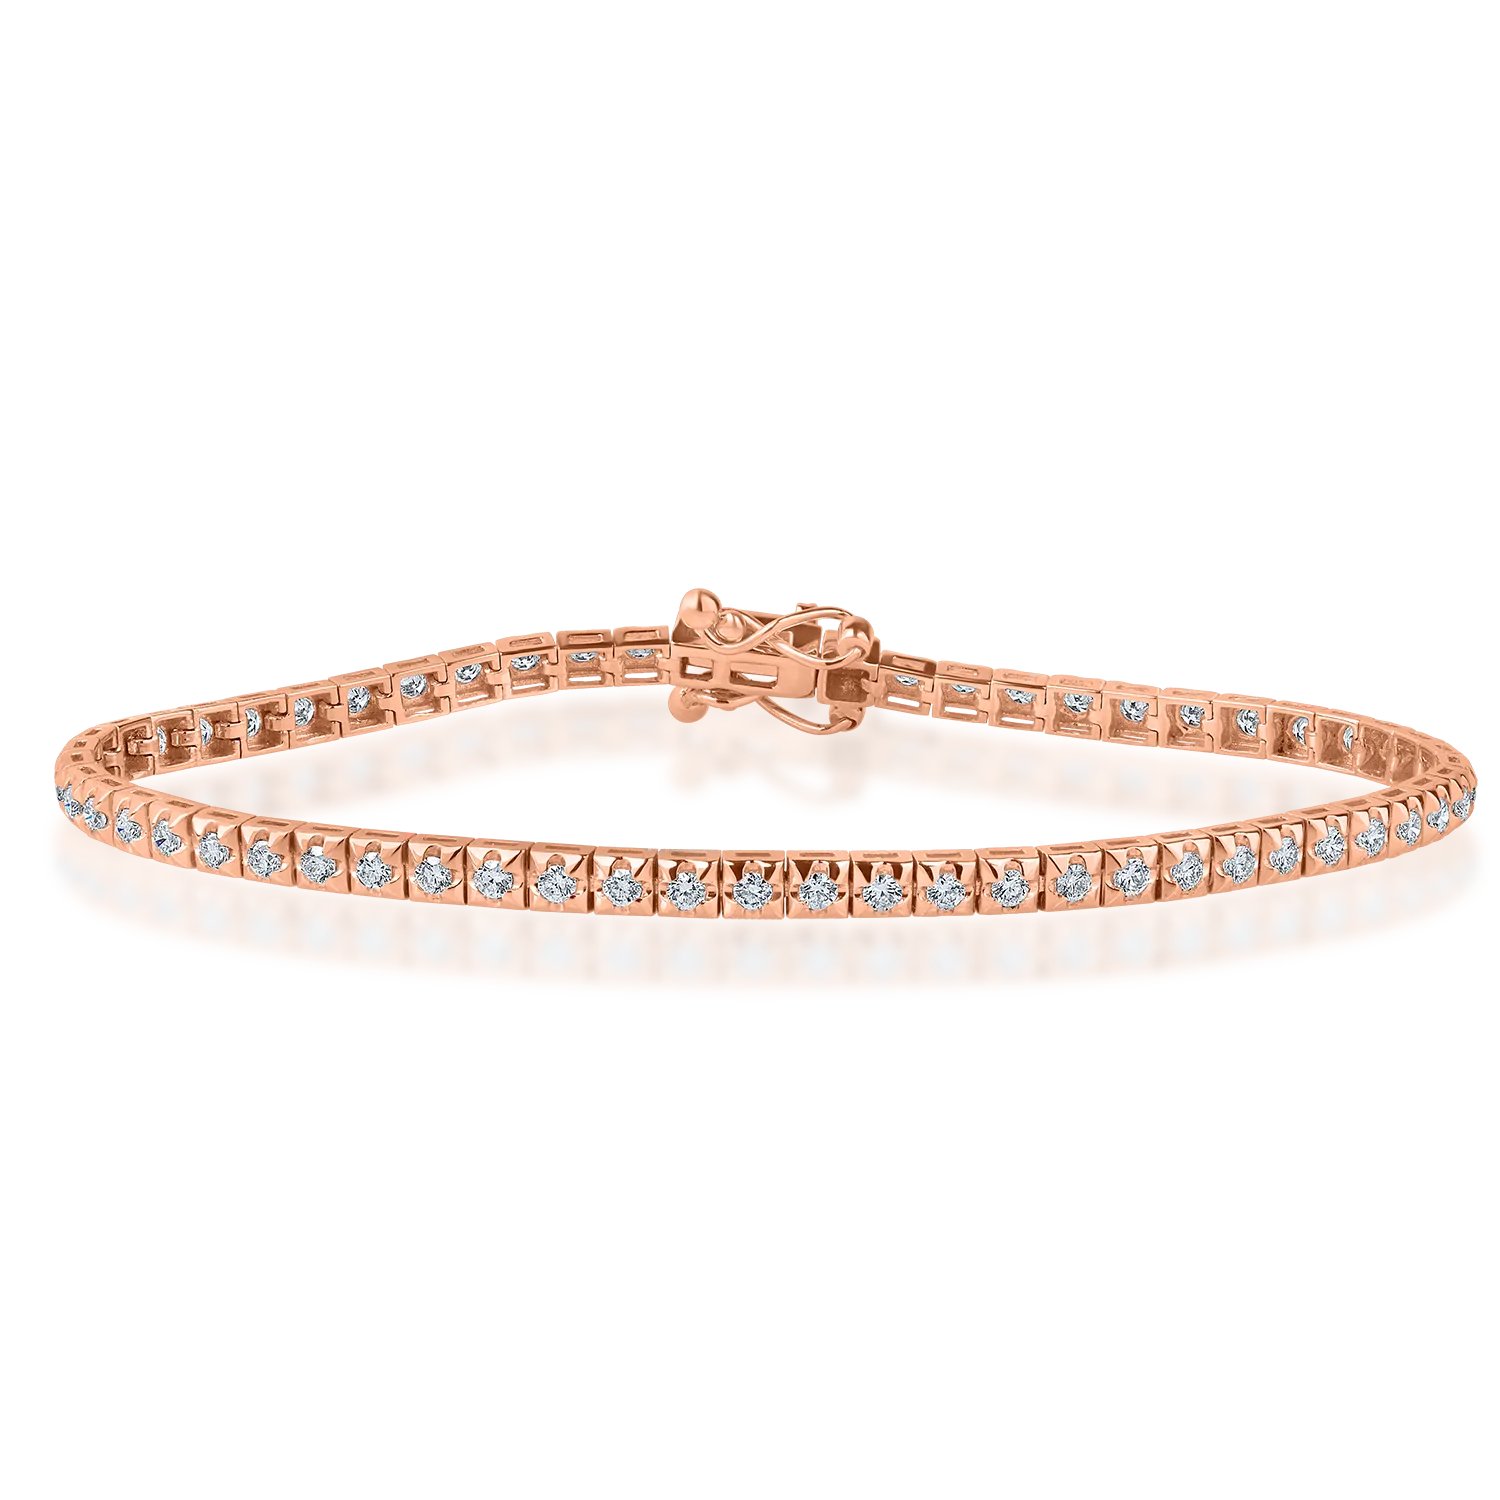 Rose gold tennis bracelet with 1ct diamonds